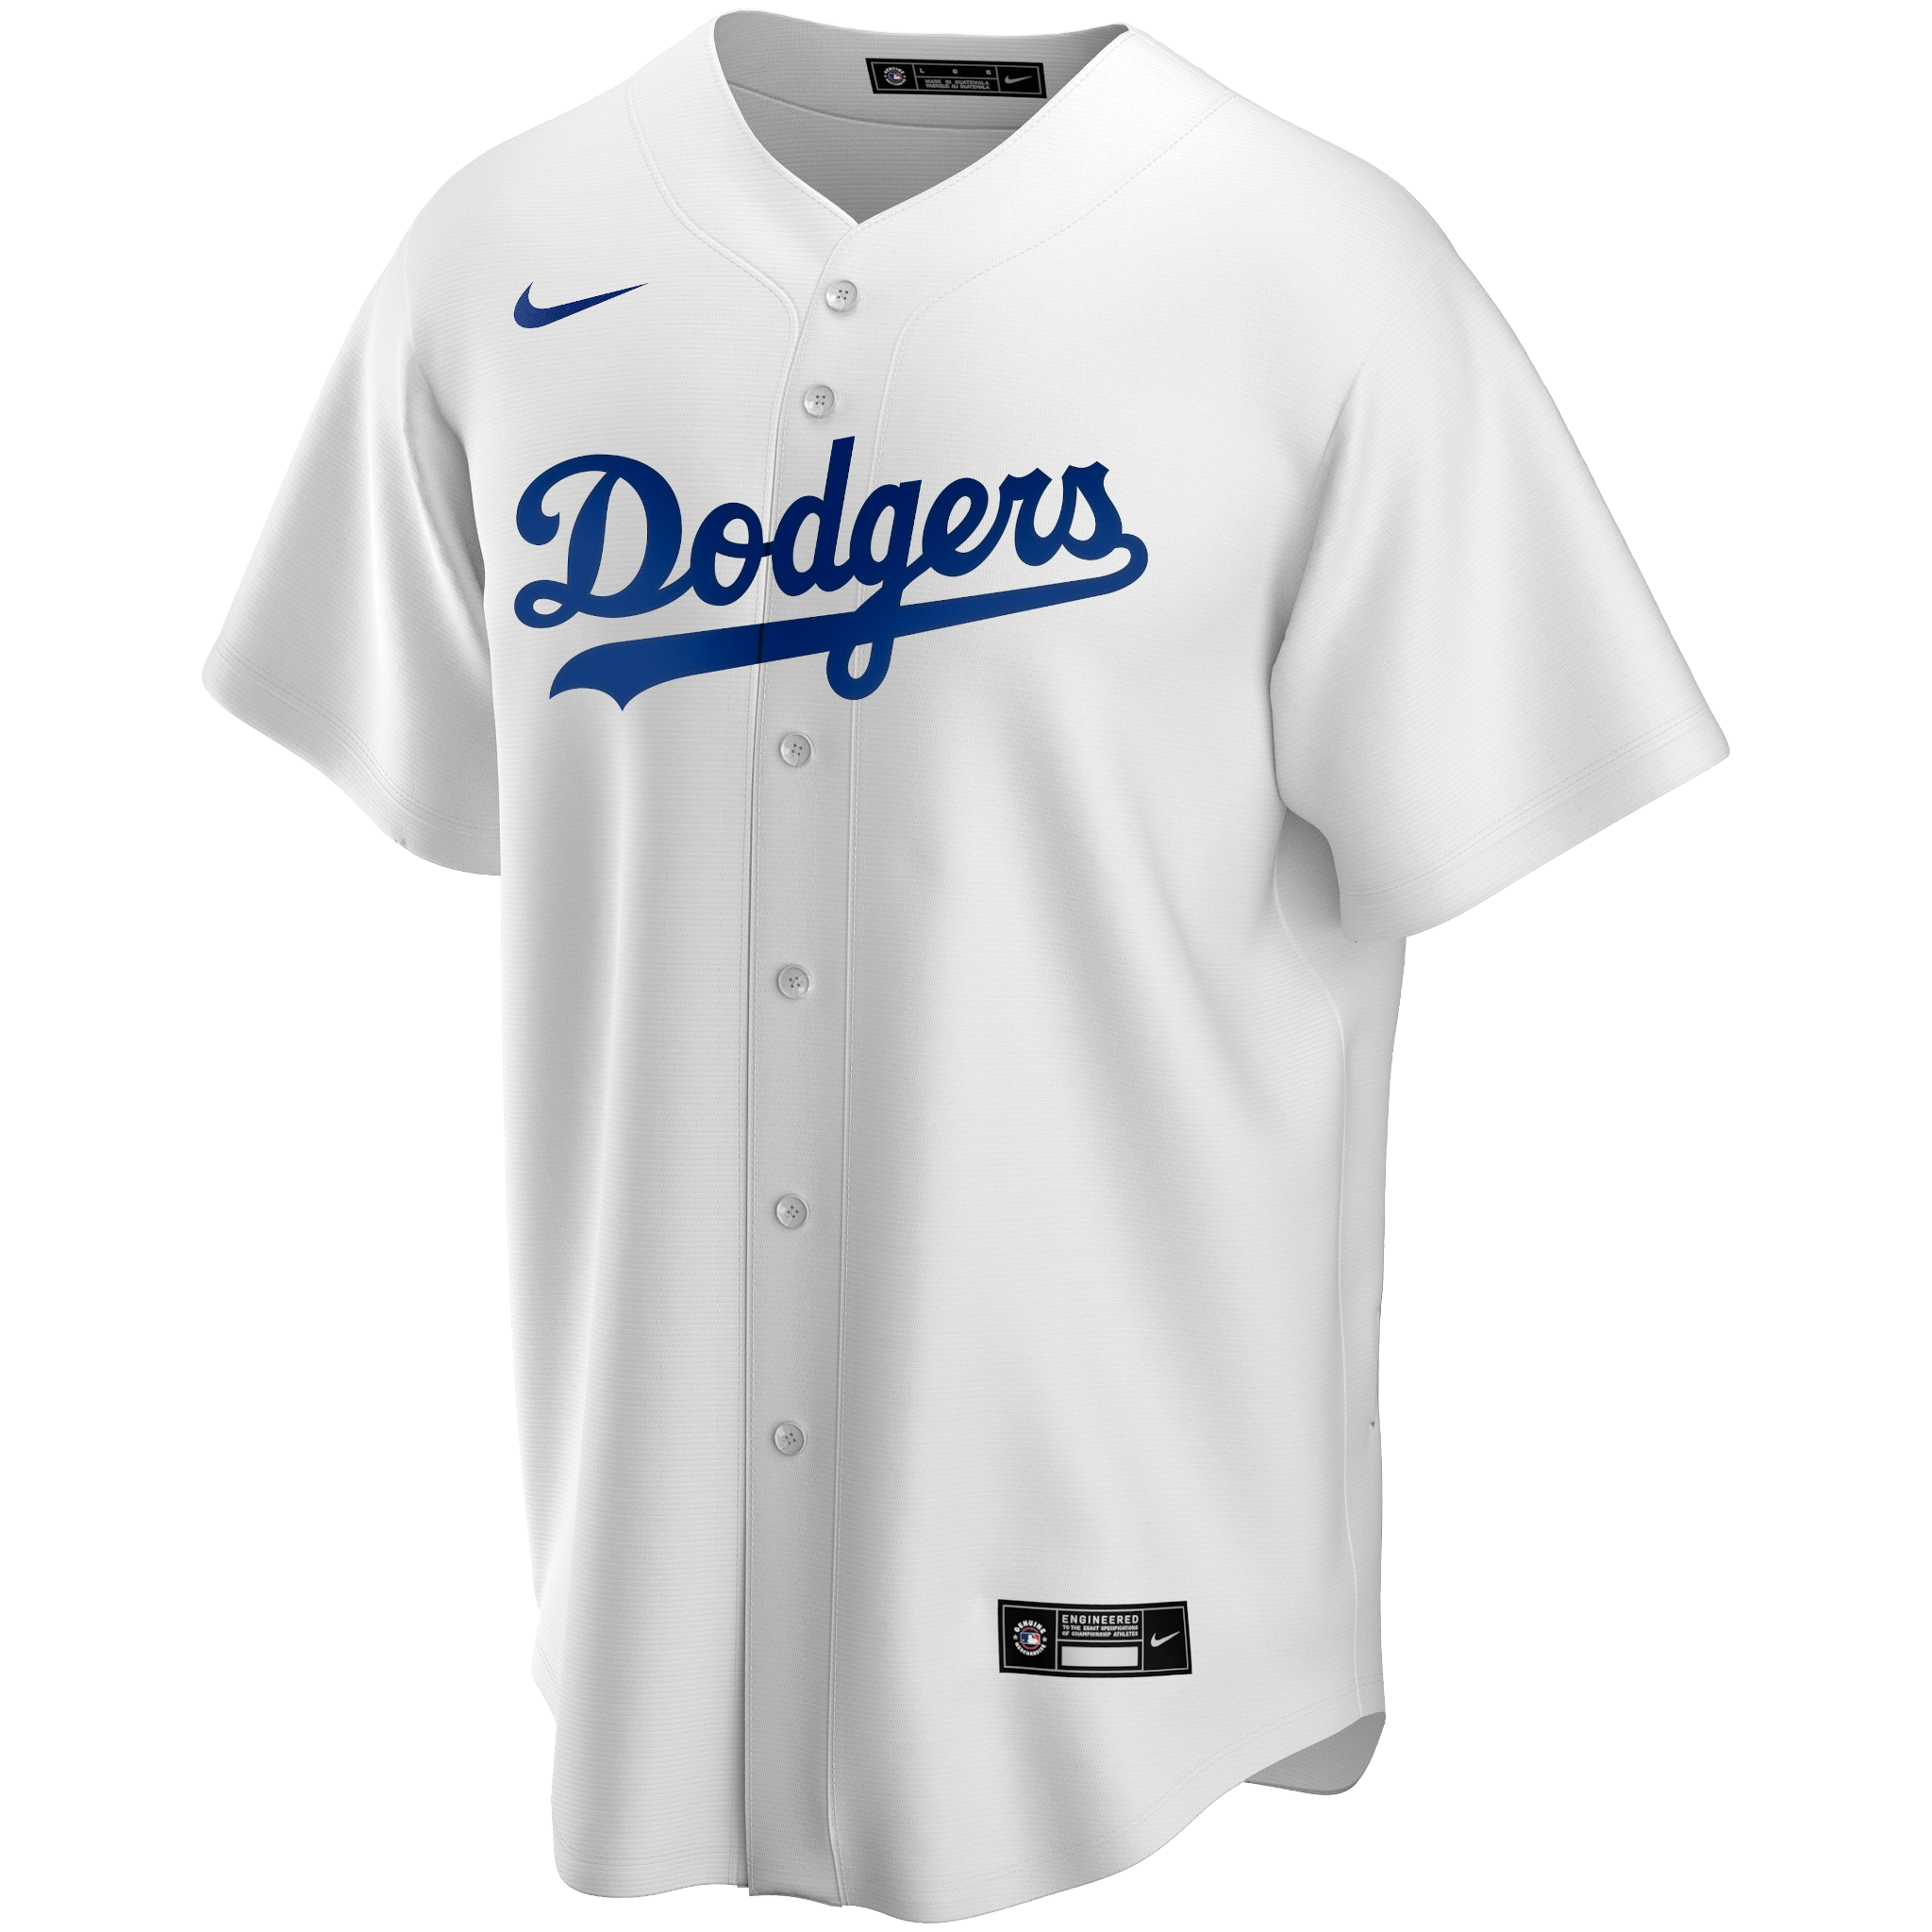 Max Muncy Jersey, Dodgers Max Muncy Jerseys, Authentic, Replica, Home, Away